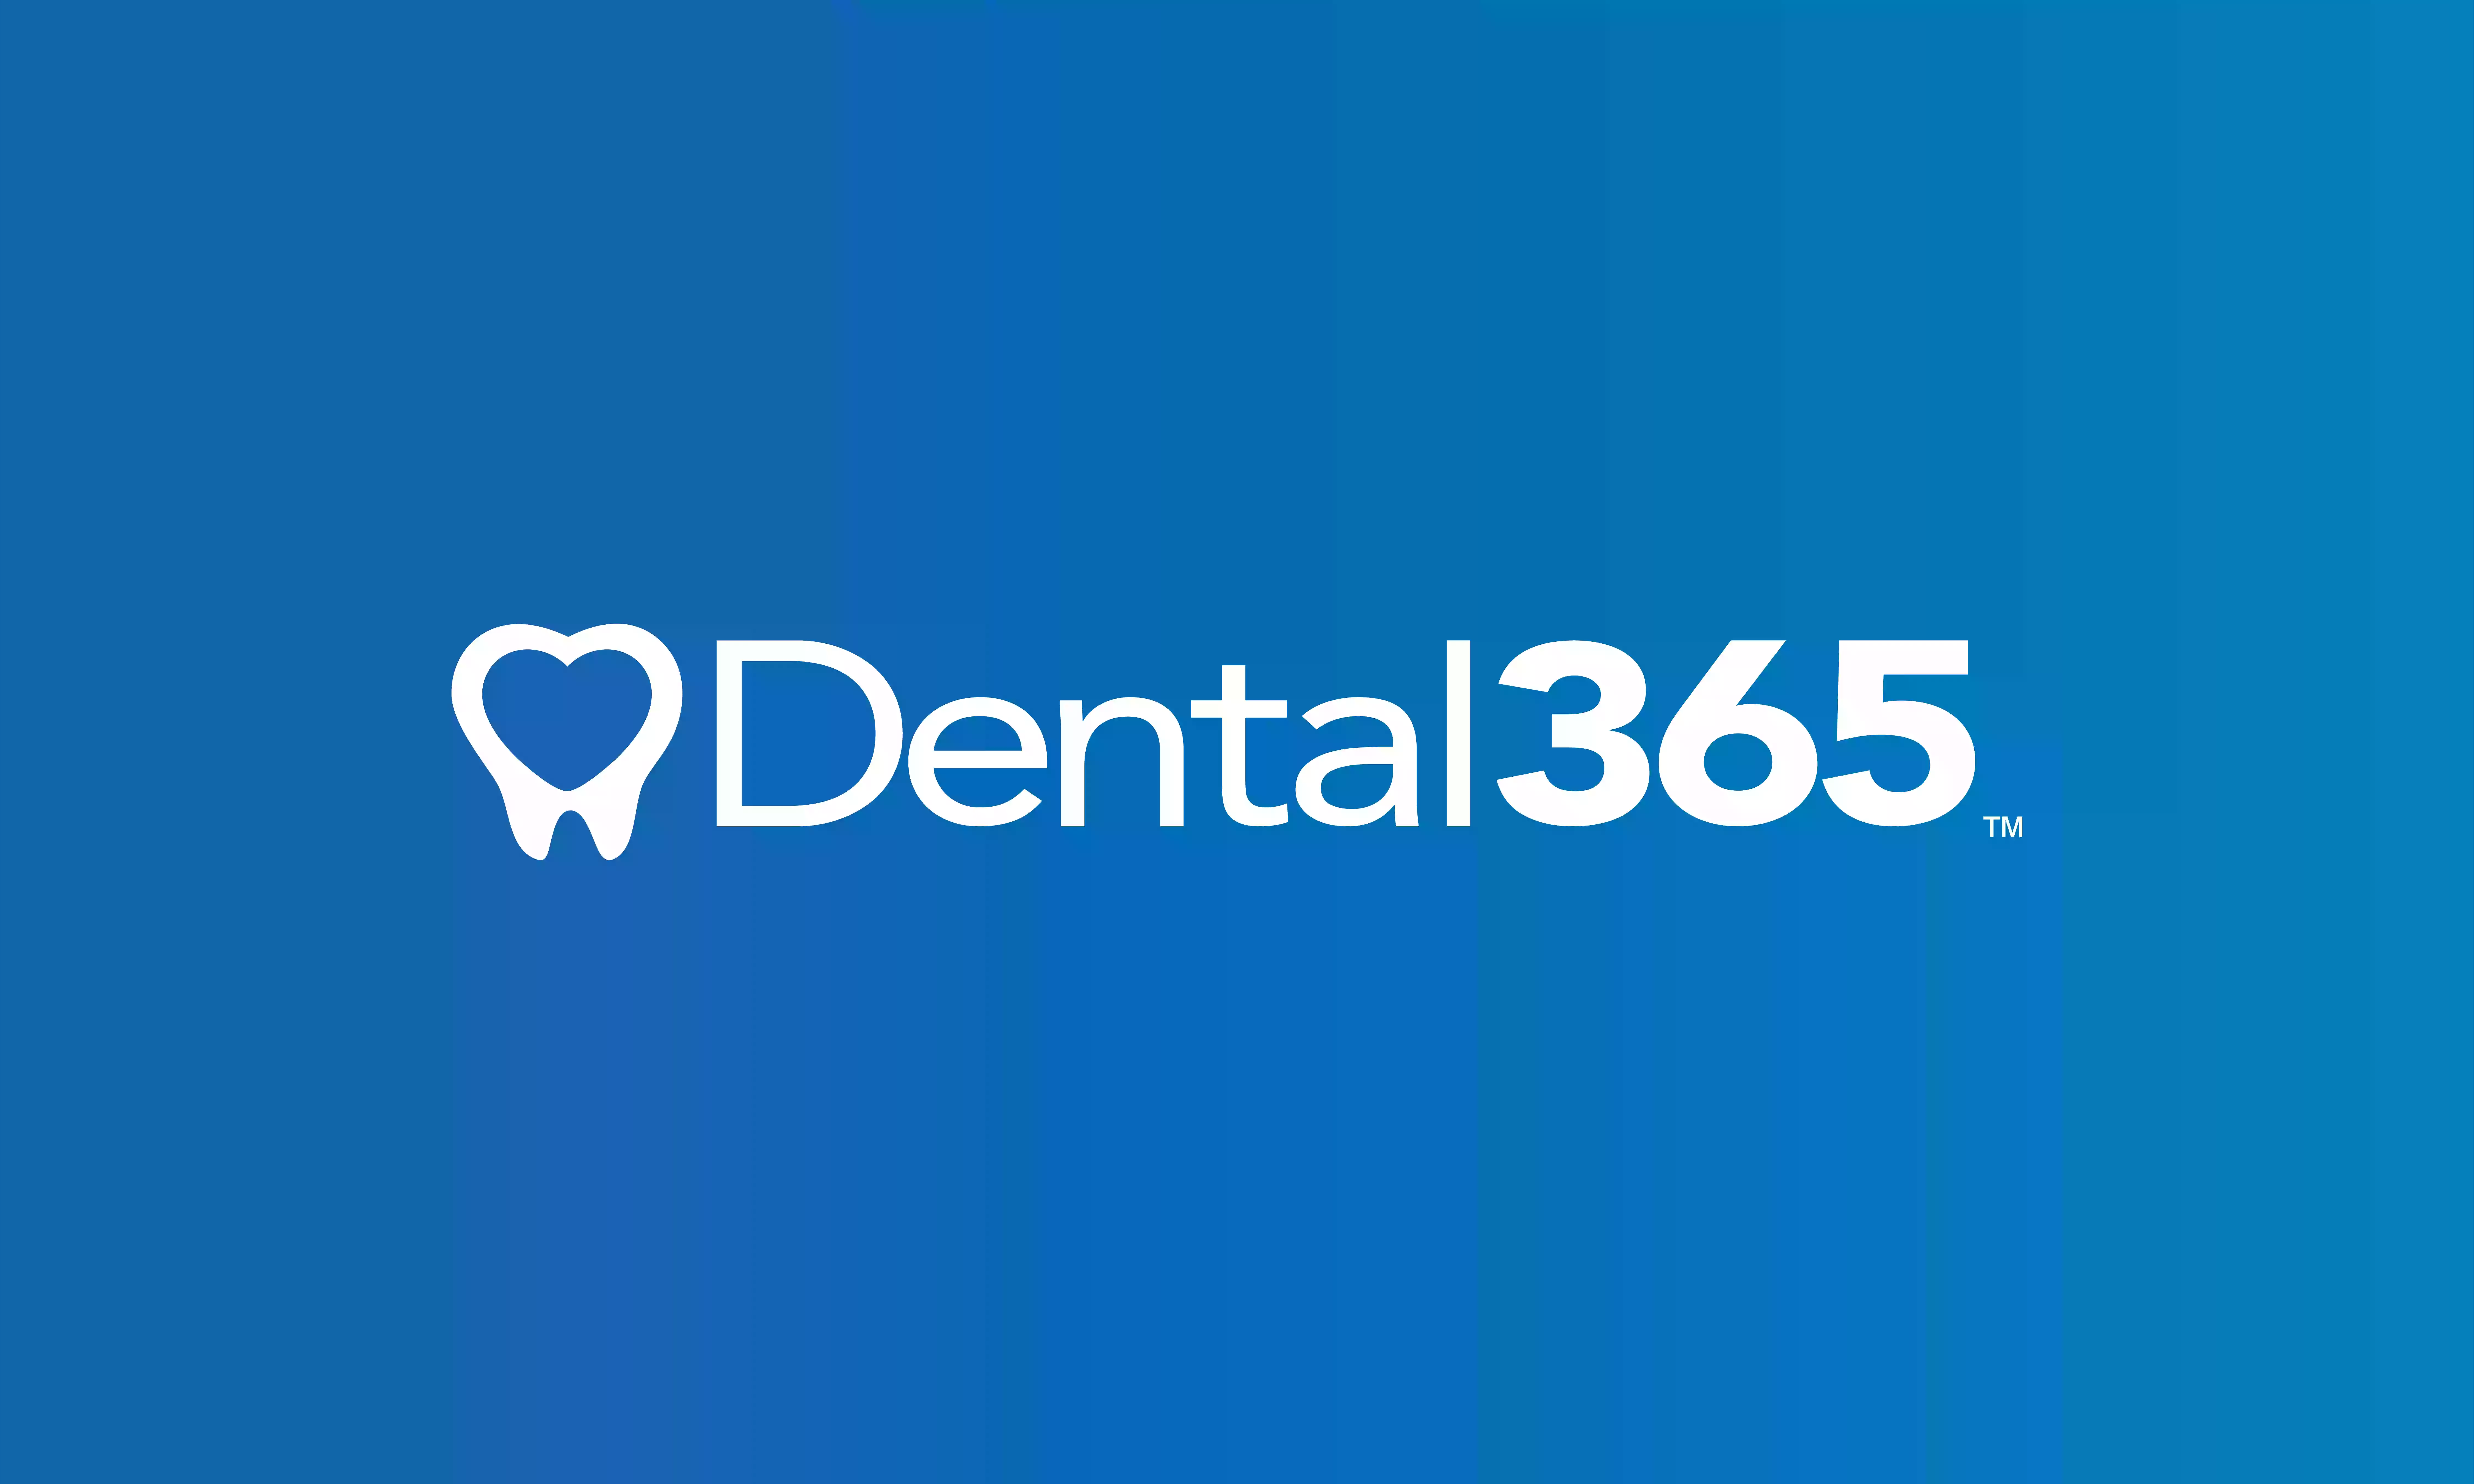 Baines Family Dental - A Dental365 Company